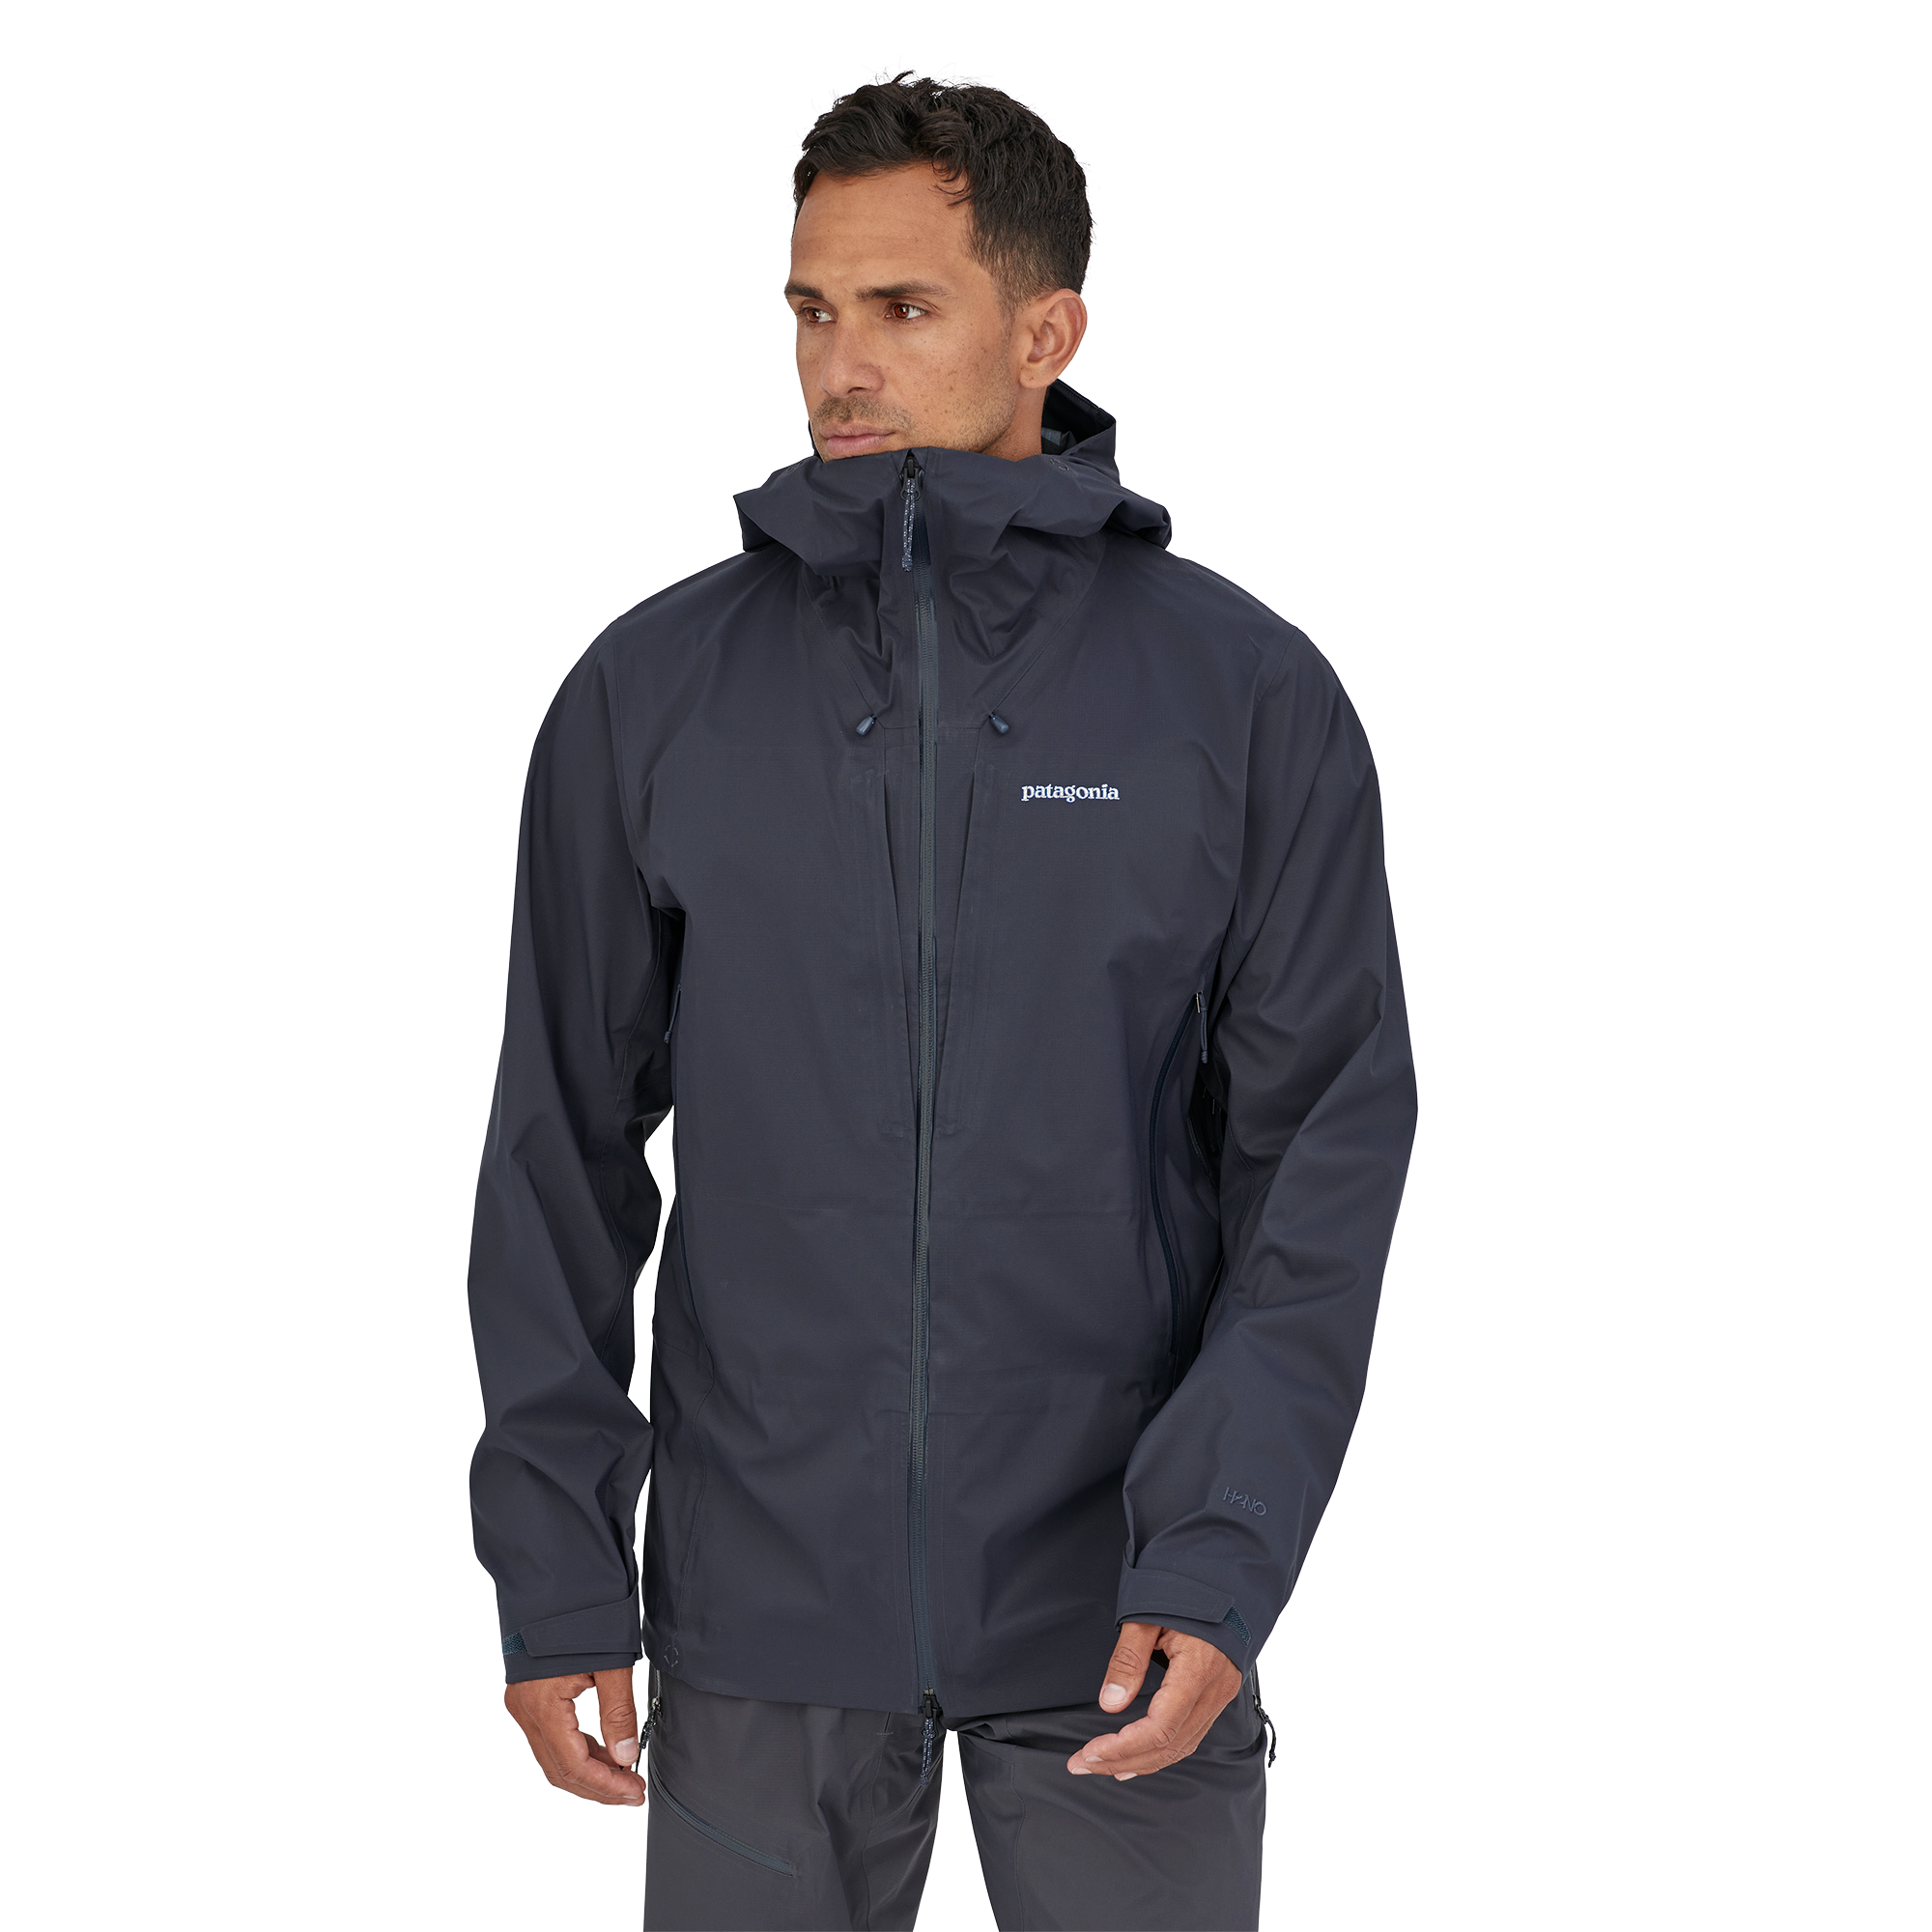 Patagonia Men's Dual Aspect Alpine Jacket